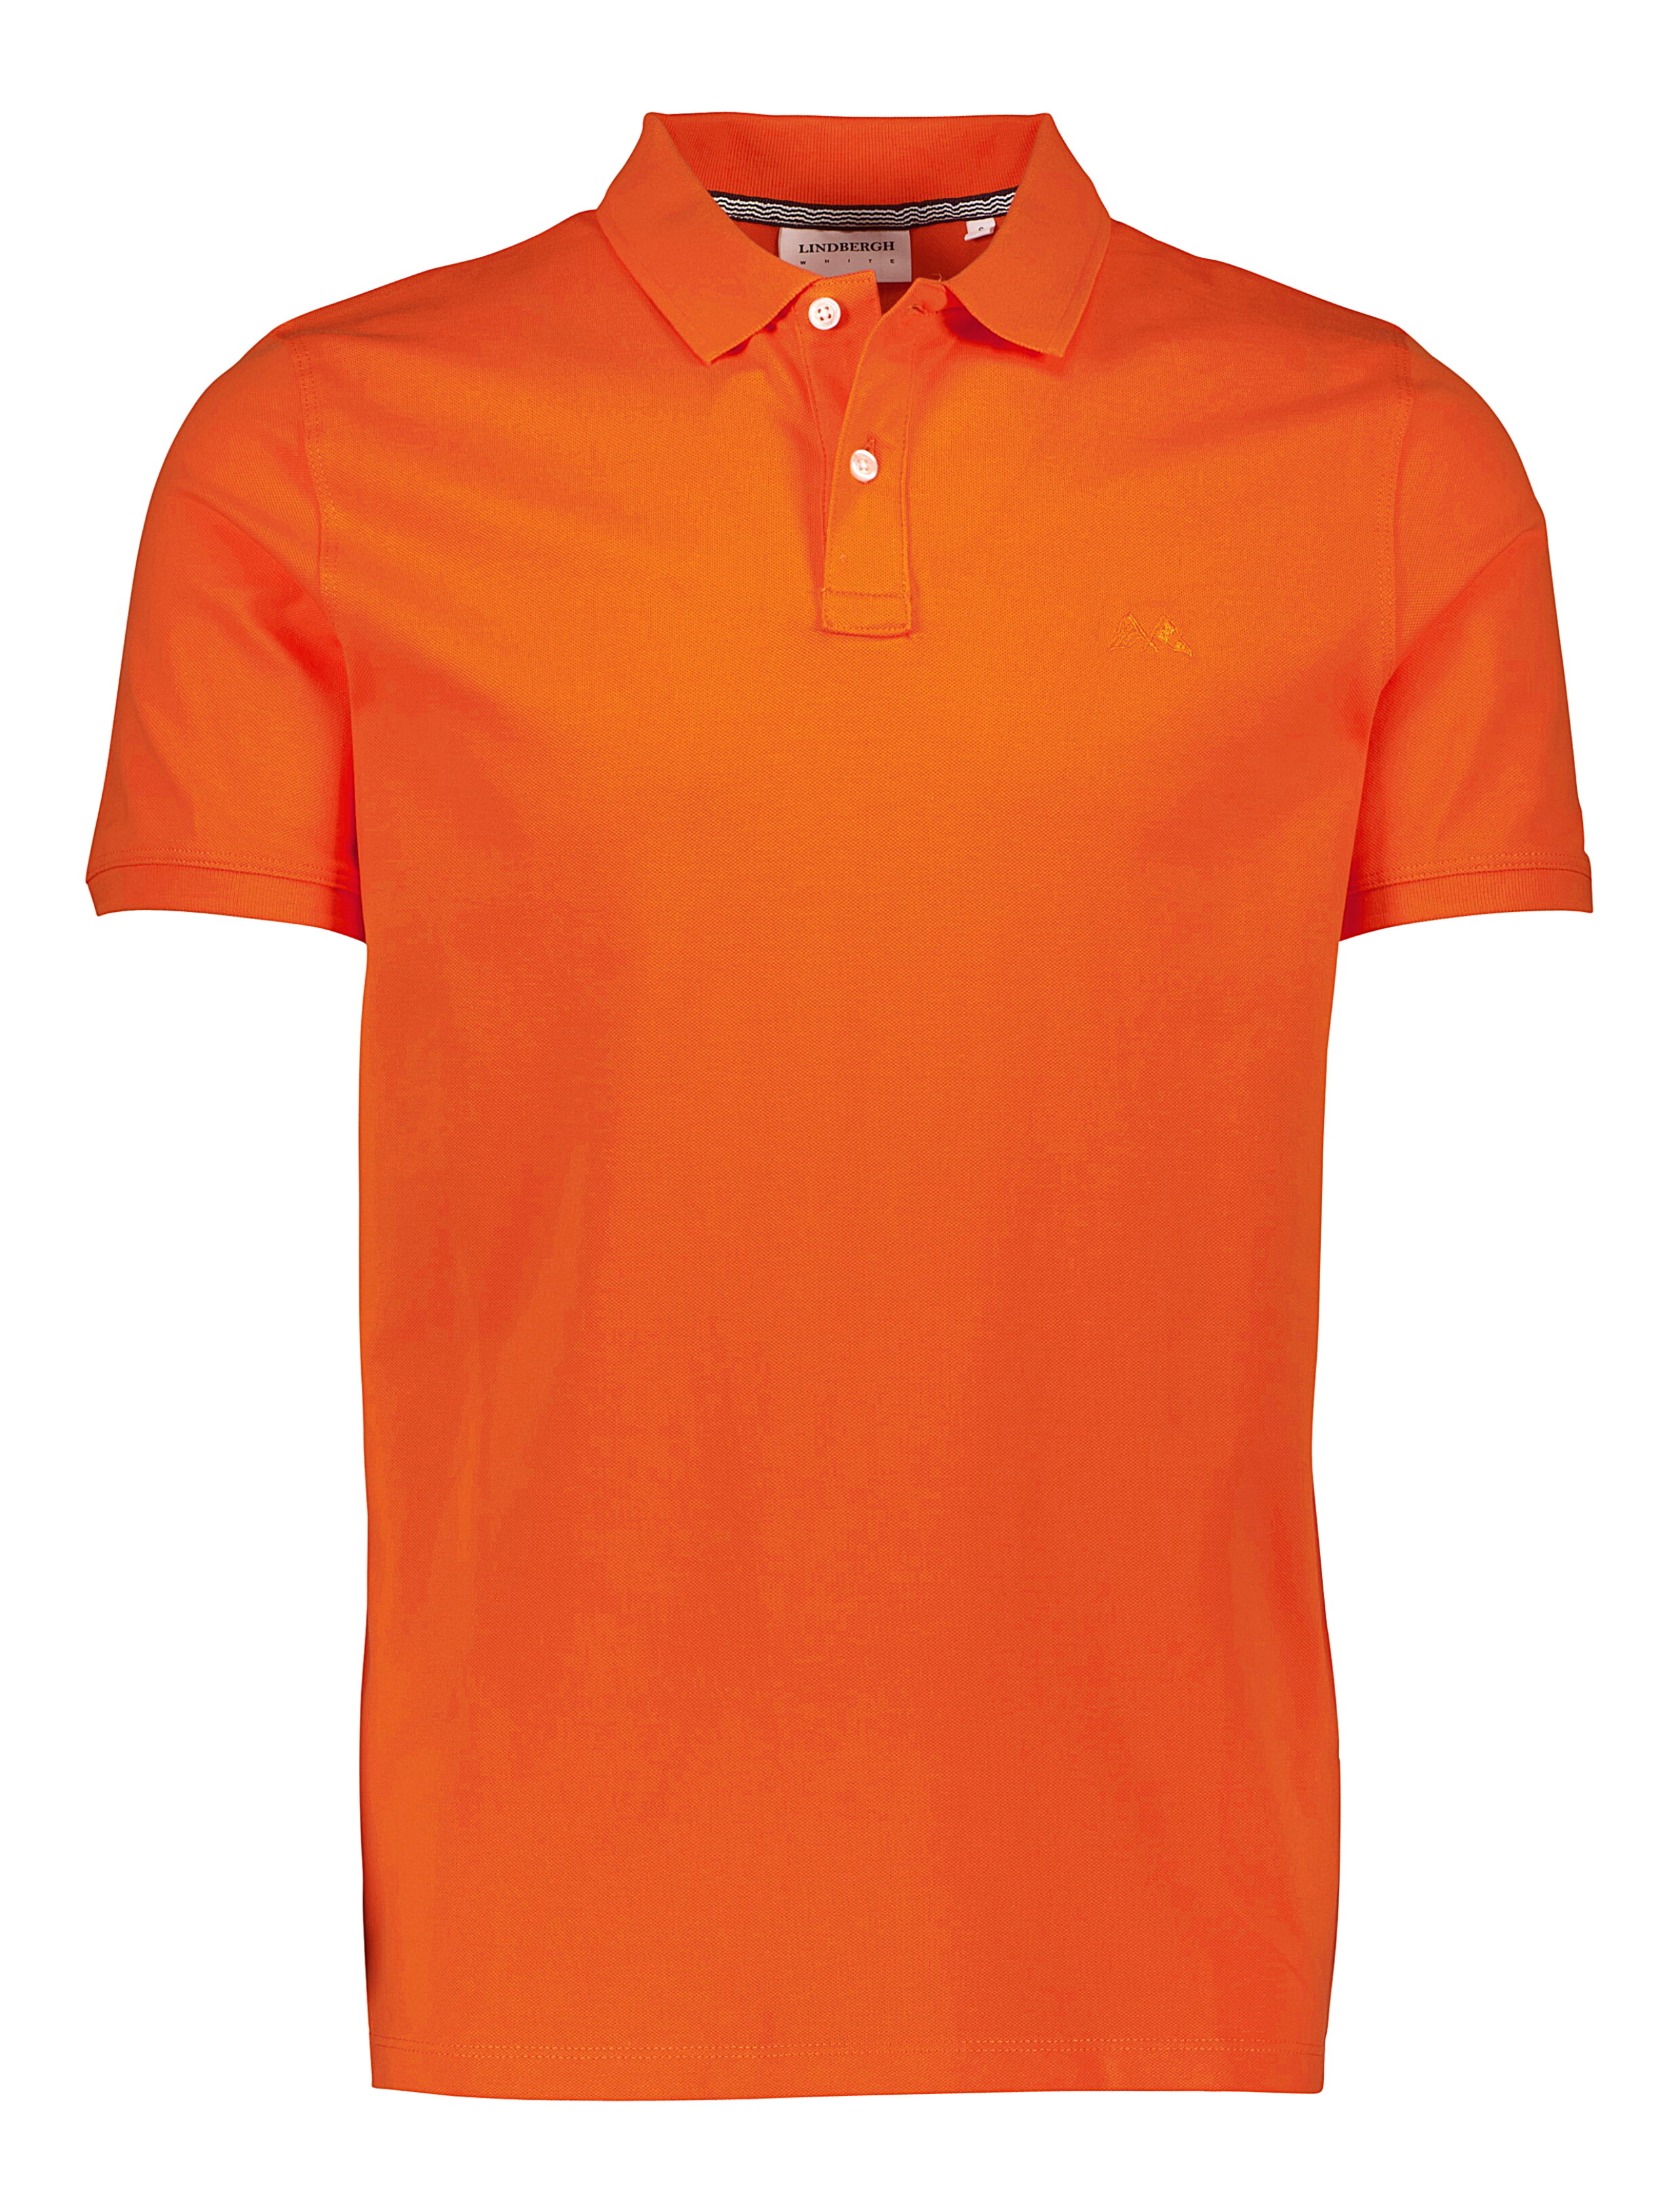 Lindbergh Poloshirt orange / orange